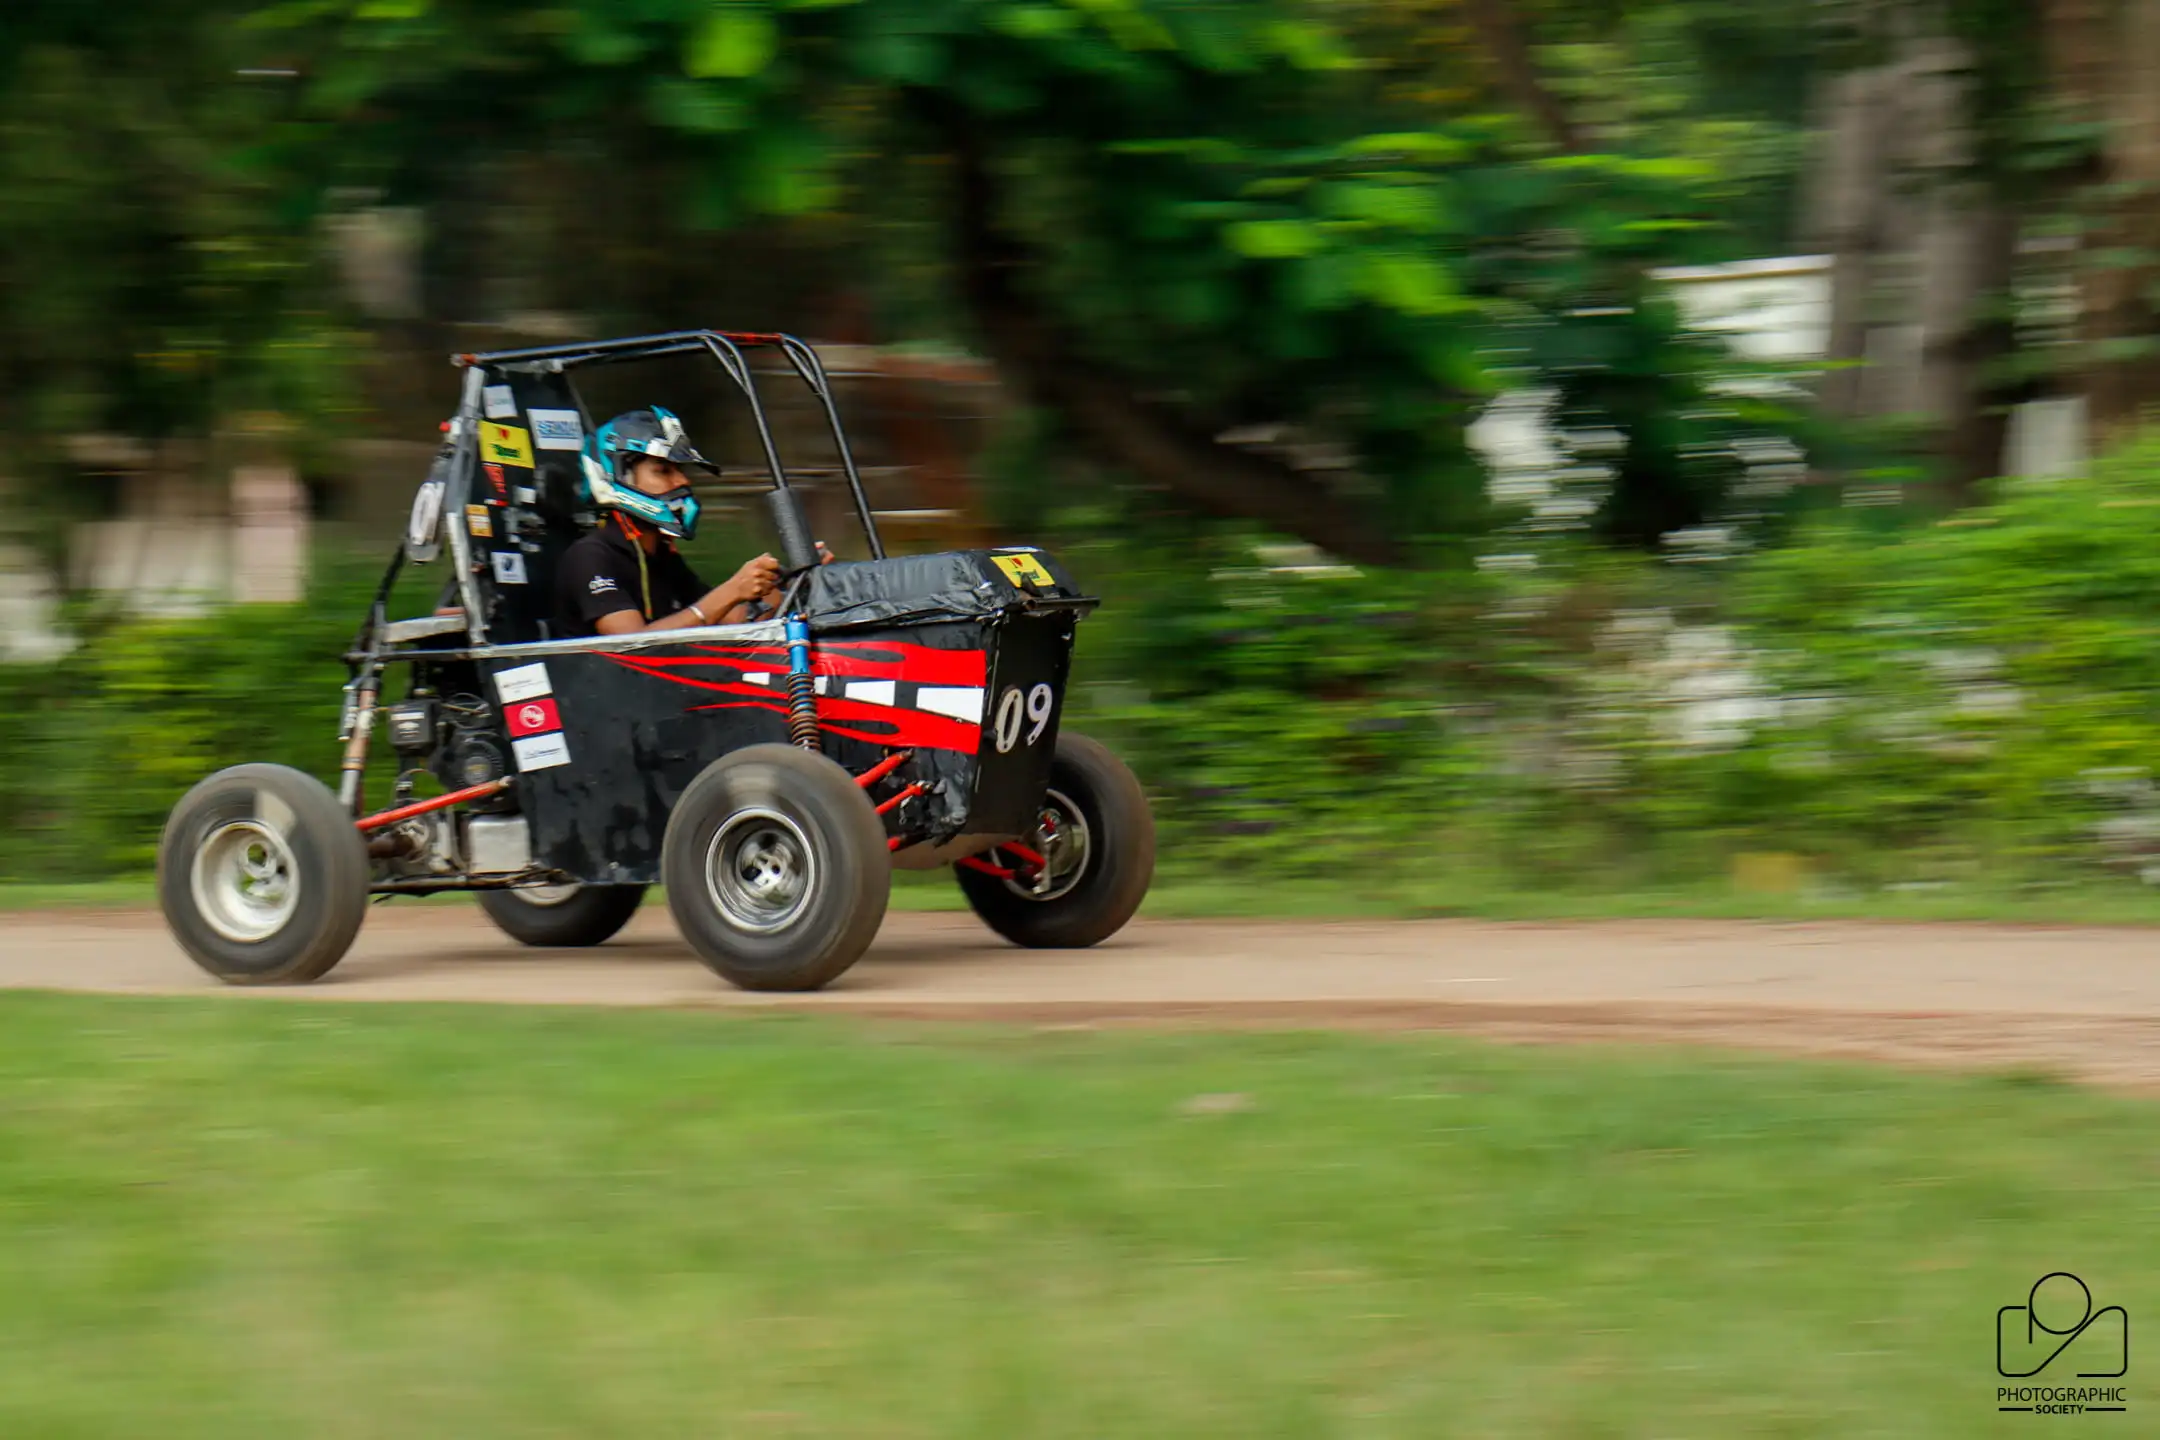 Team Firebolt testing and driving its ATV at BIT Mesra Ranchi campus